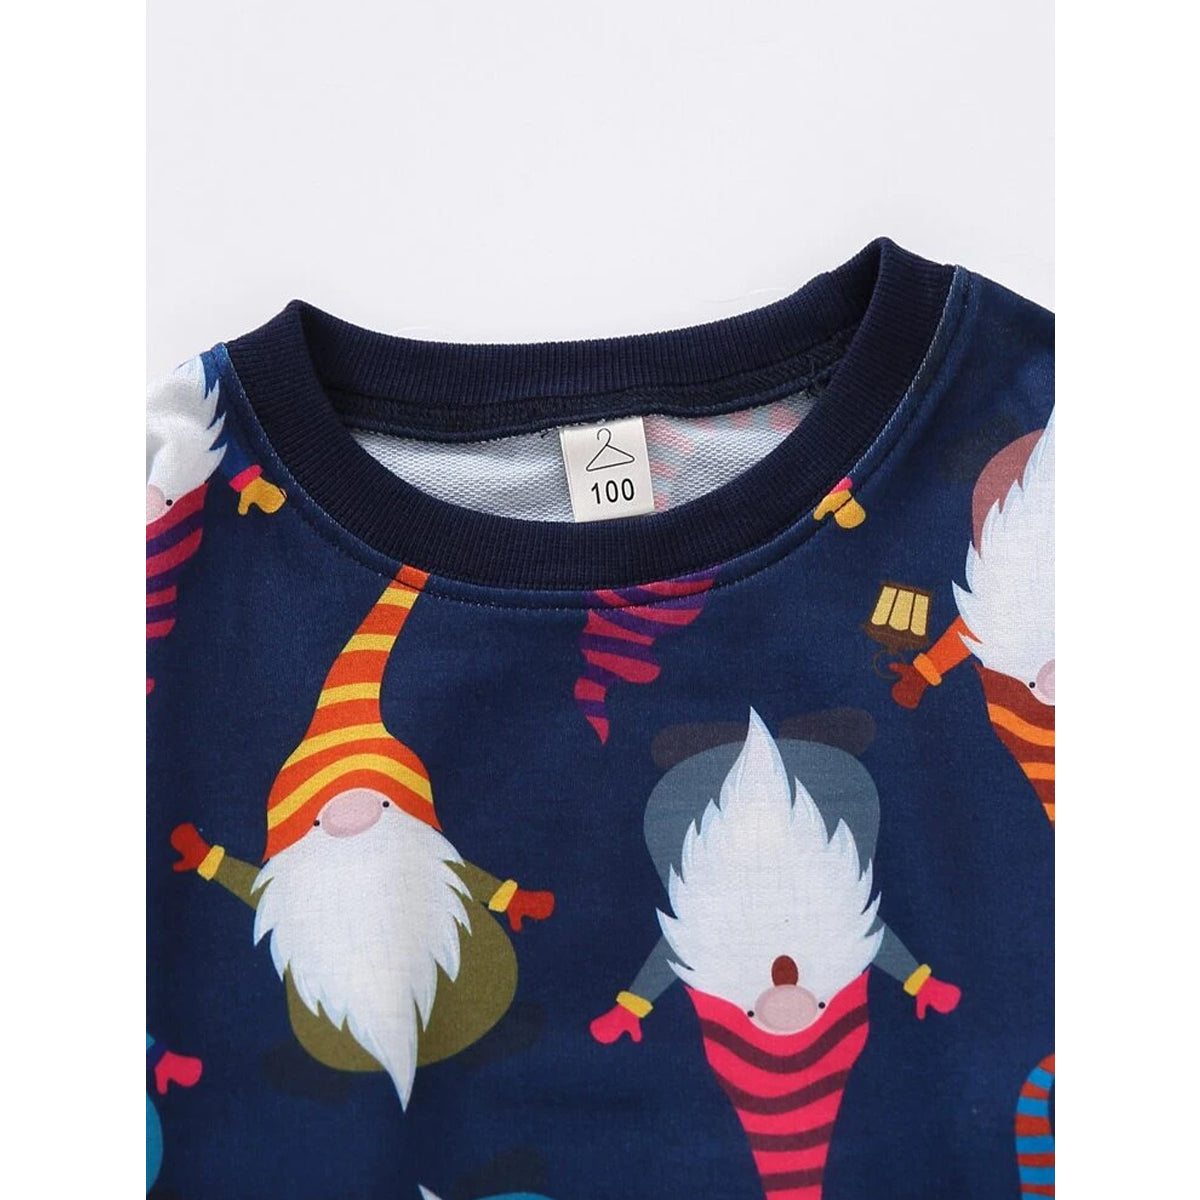 Venutaloza Boy's Letter Color Block & Round Neck Stripe & Sewing Patterns (Combo Pack of 3) T-shirt For Boy's.